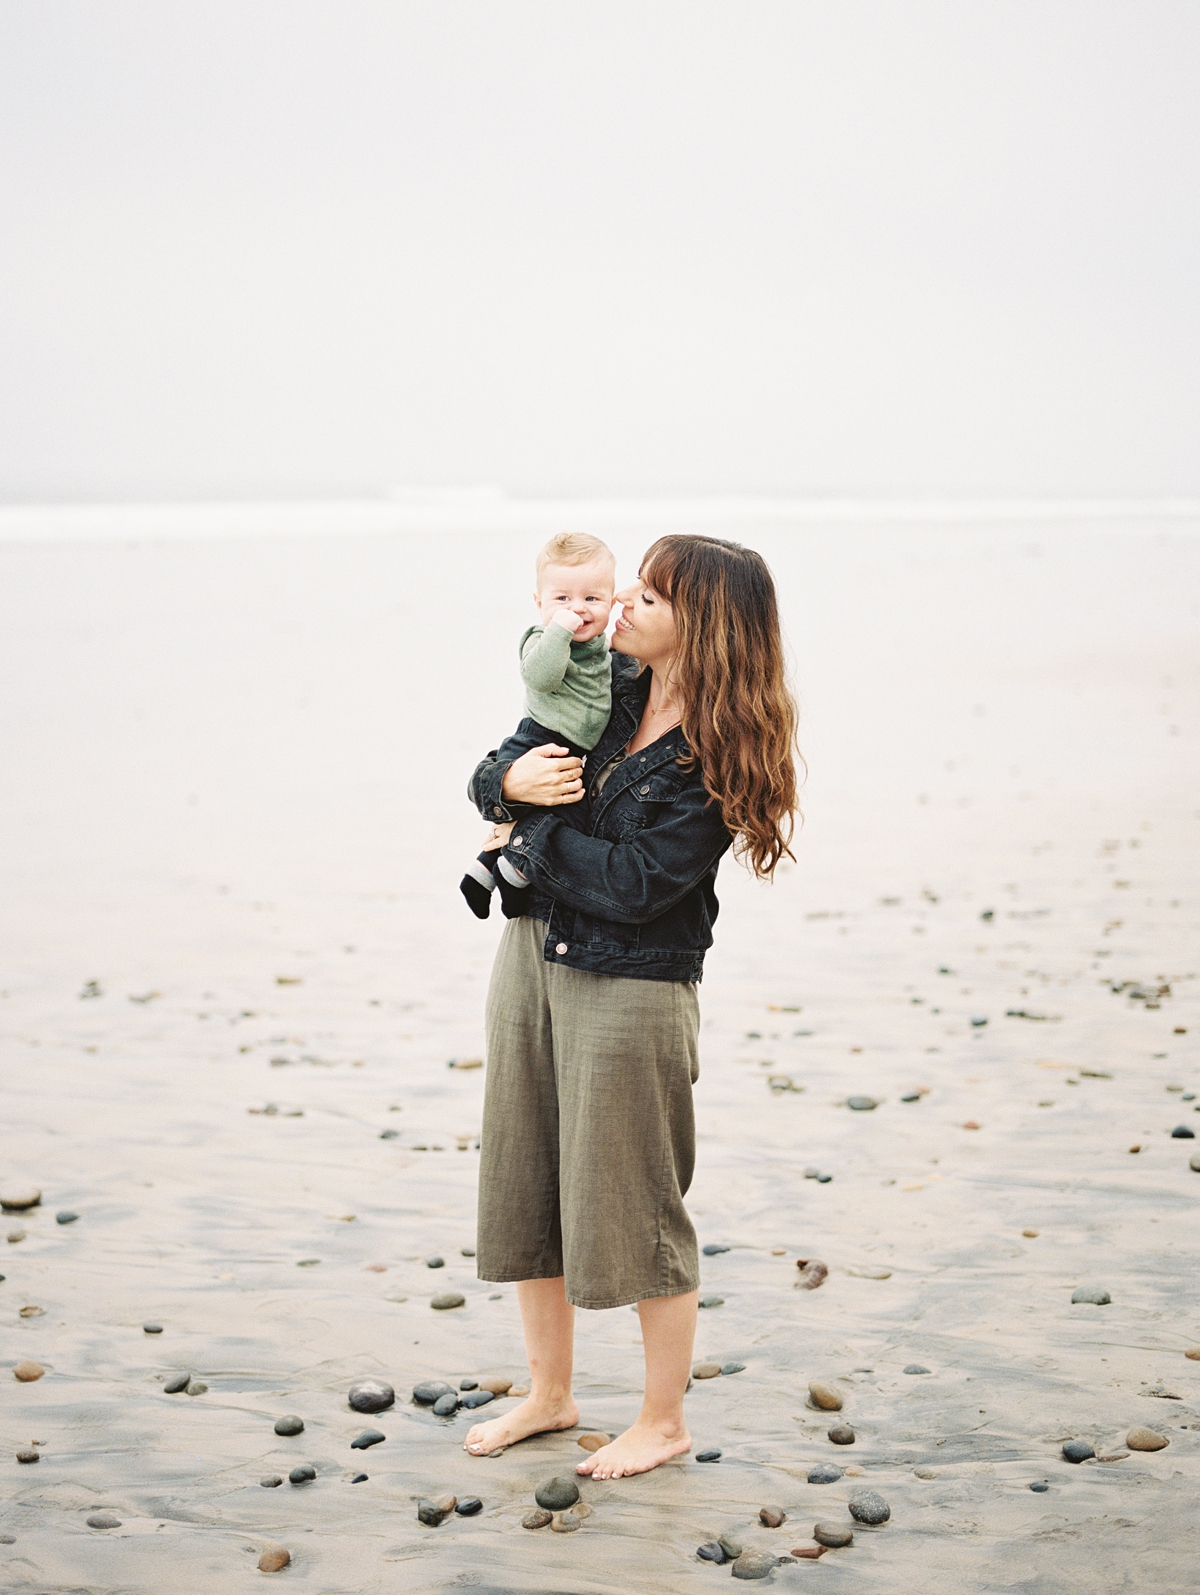 Encinitas Moonlight Beach family portraits - San Diego Photographer Jade Maria Photography